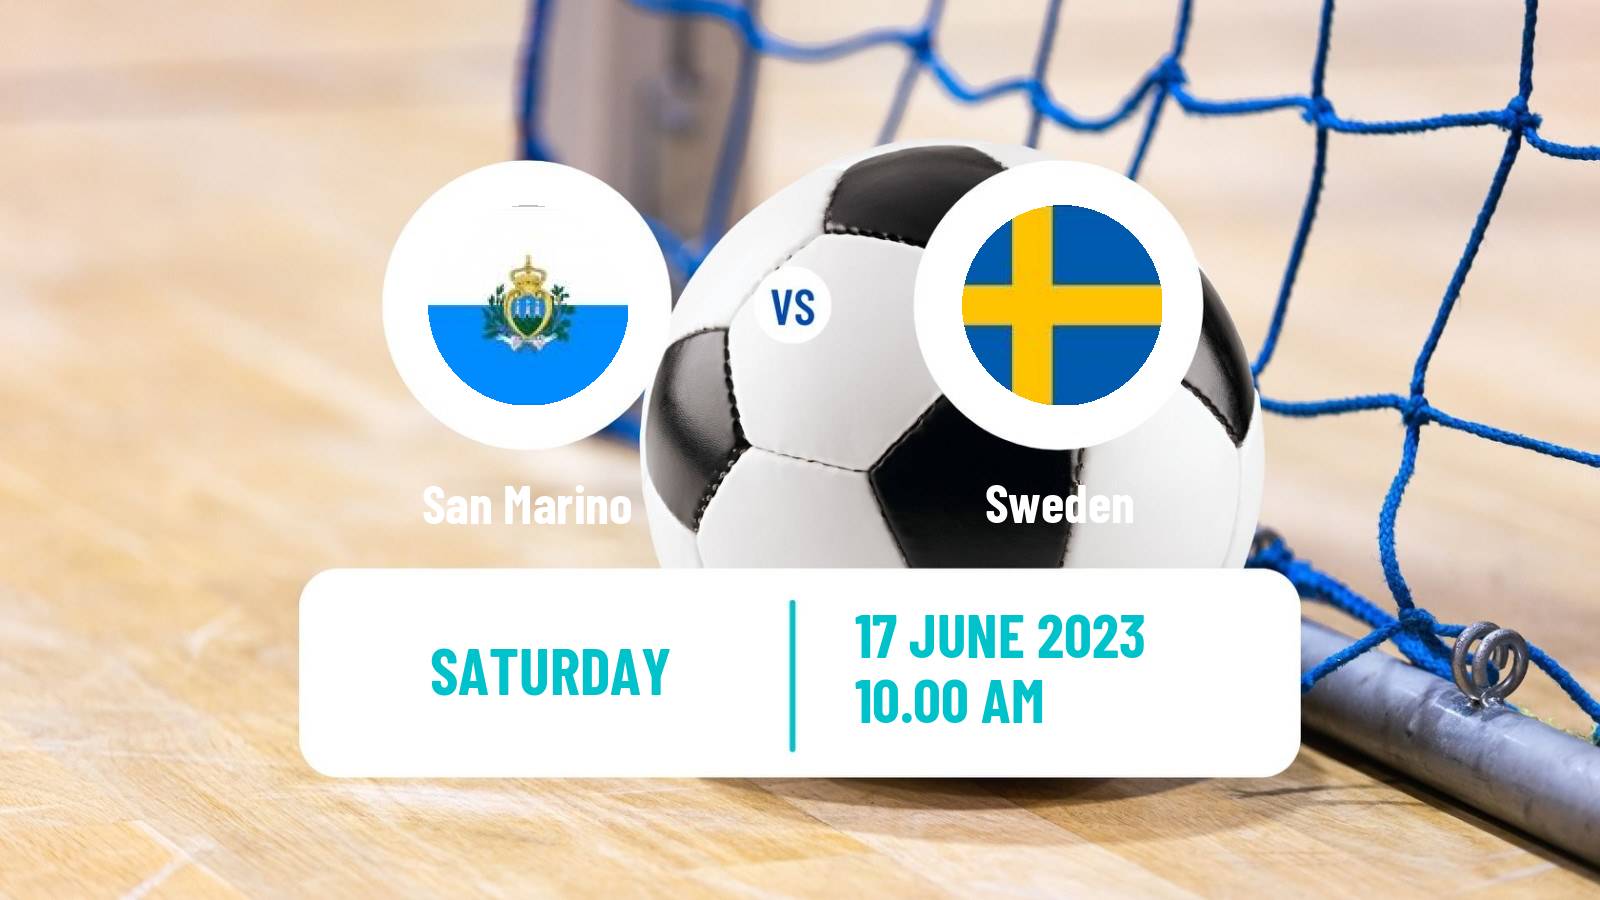 Futsal Friendly International Futsal San Marino - Sweden